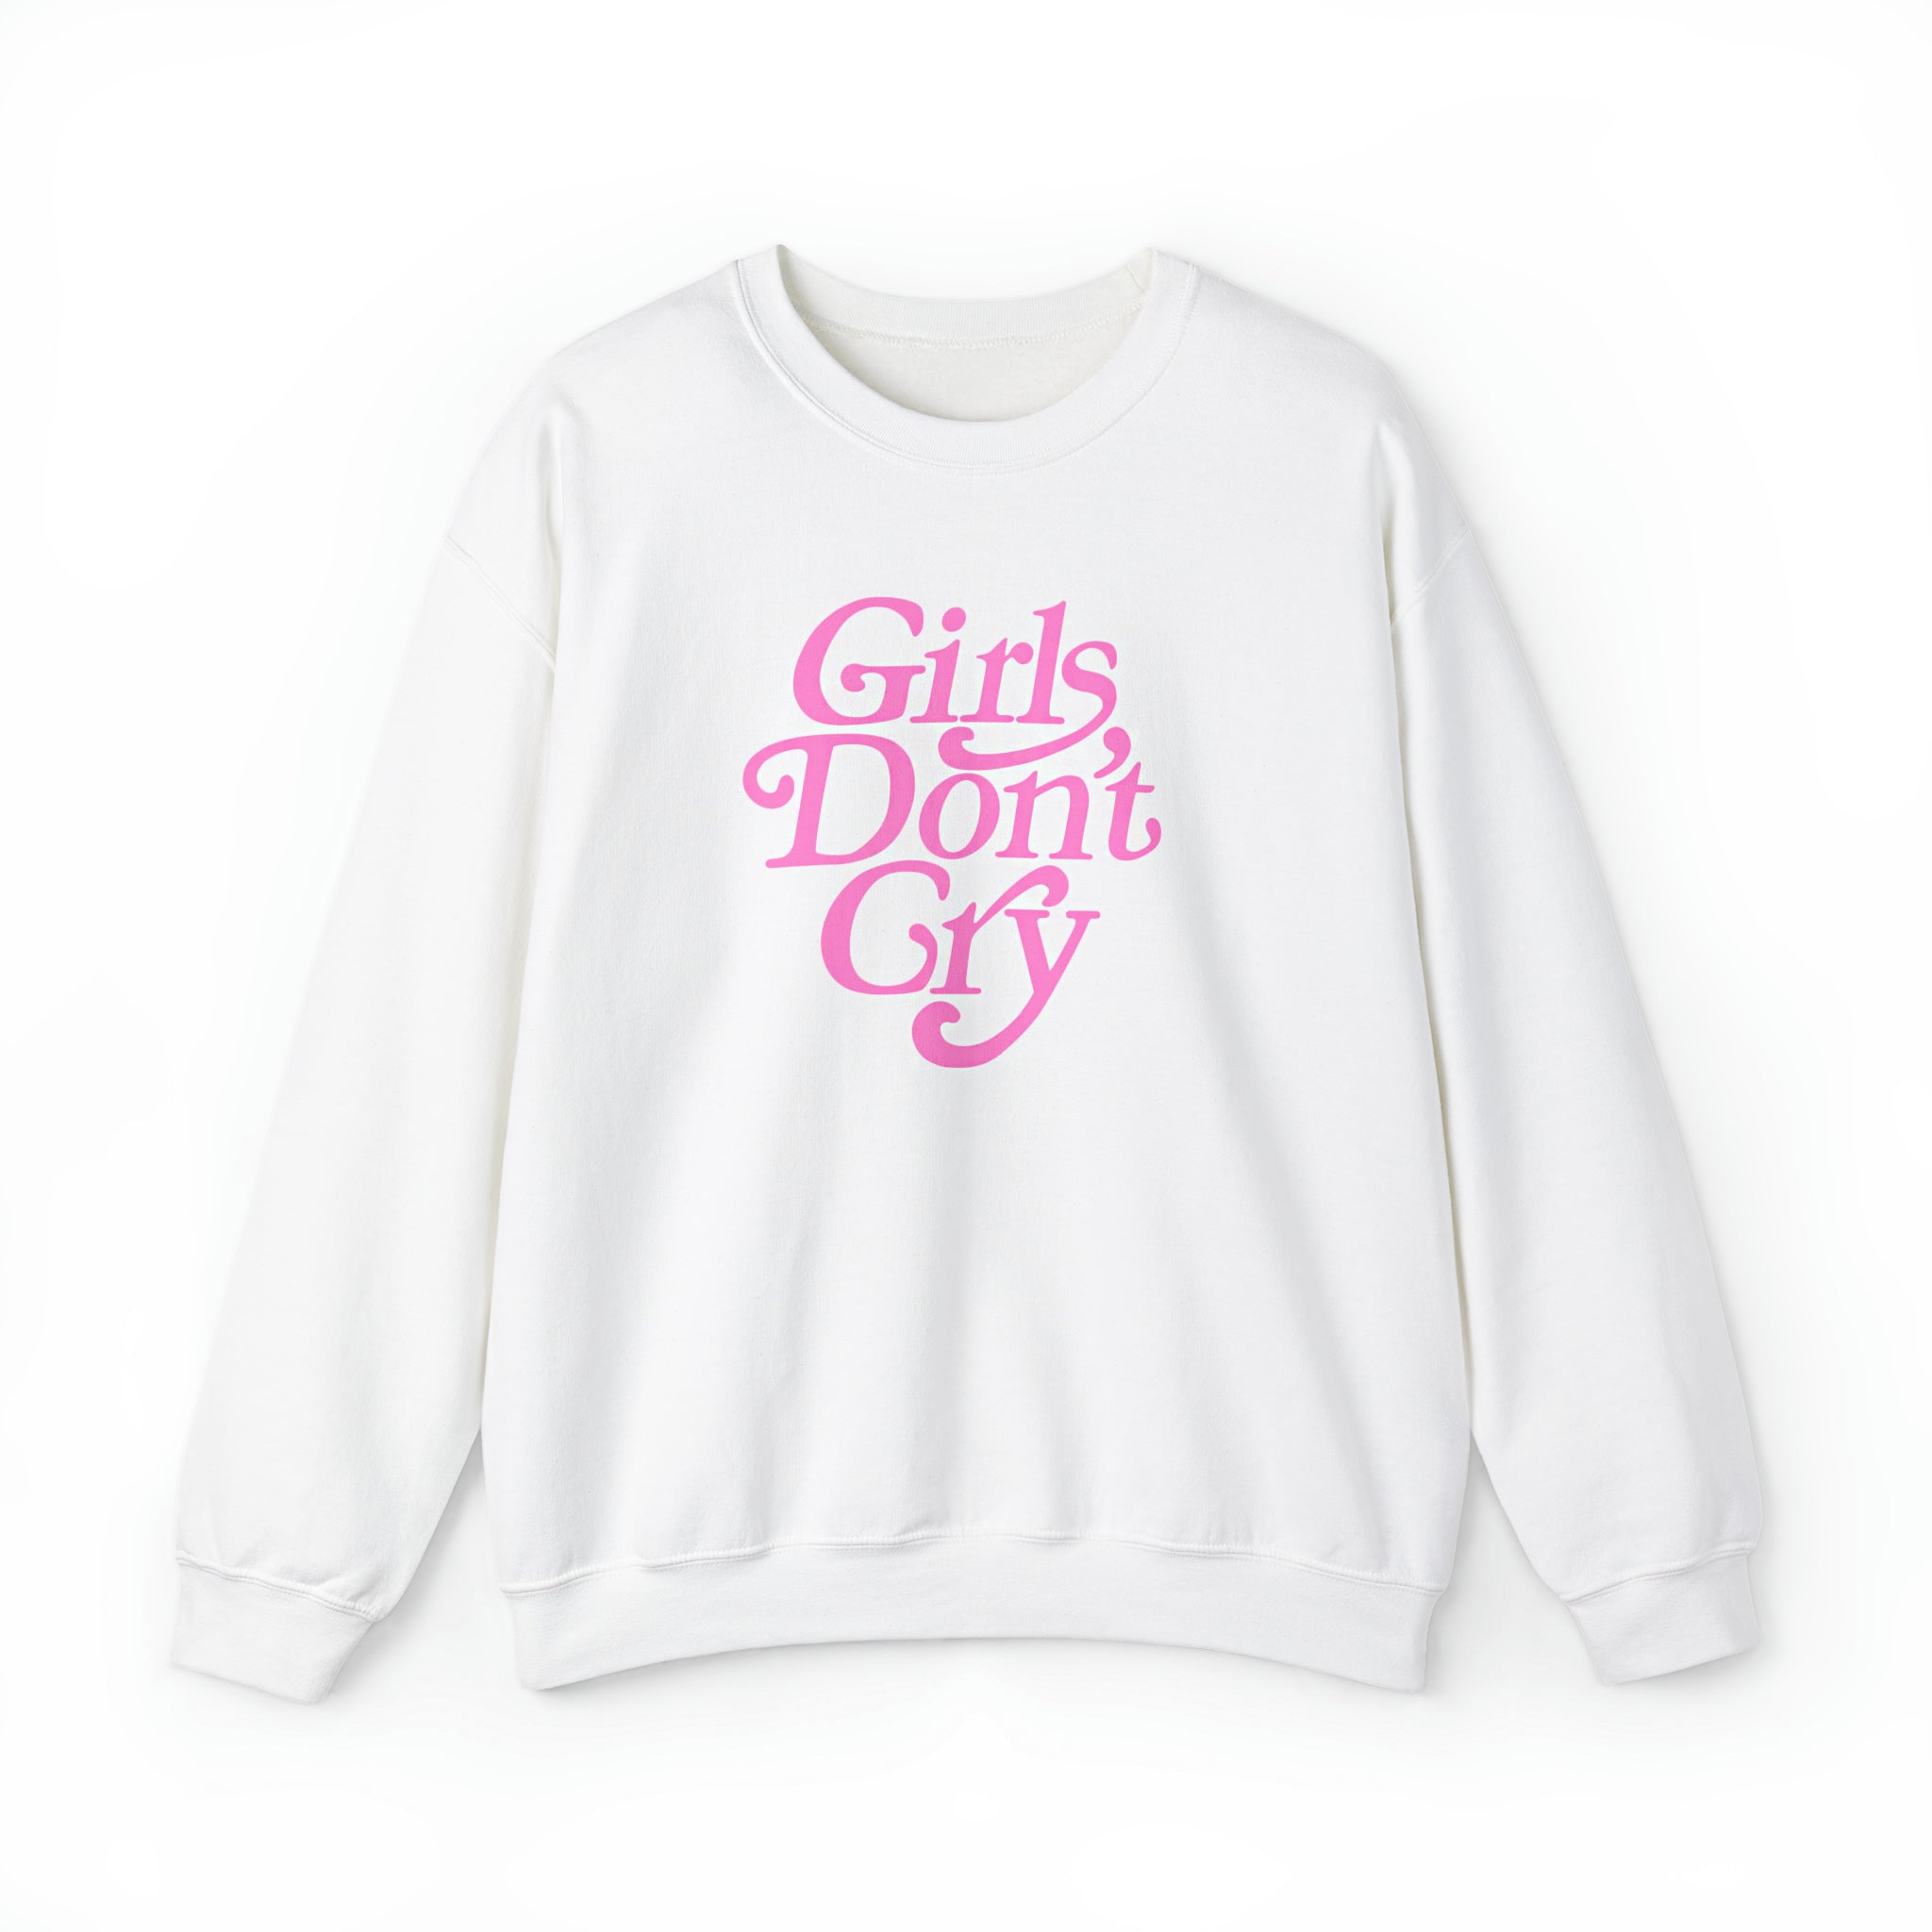 GirlsDonGirls Don't Cry longtee PINK Sサイズ - maissolarbrasil.com